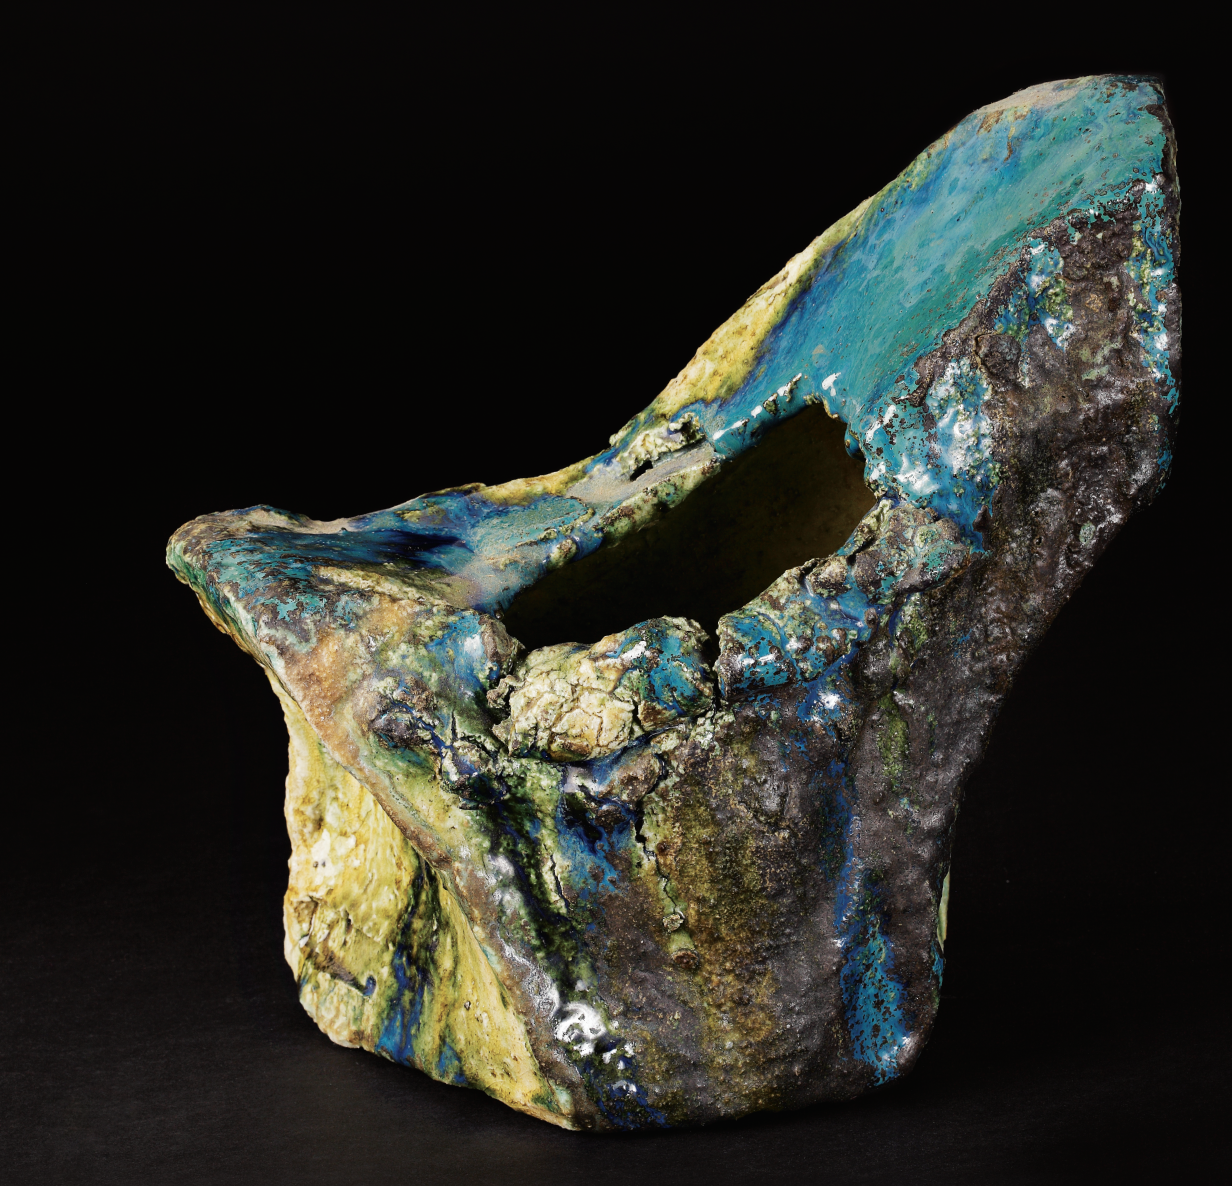 Pottery Molds by Joseph Shapiro: Buy fine art print